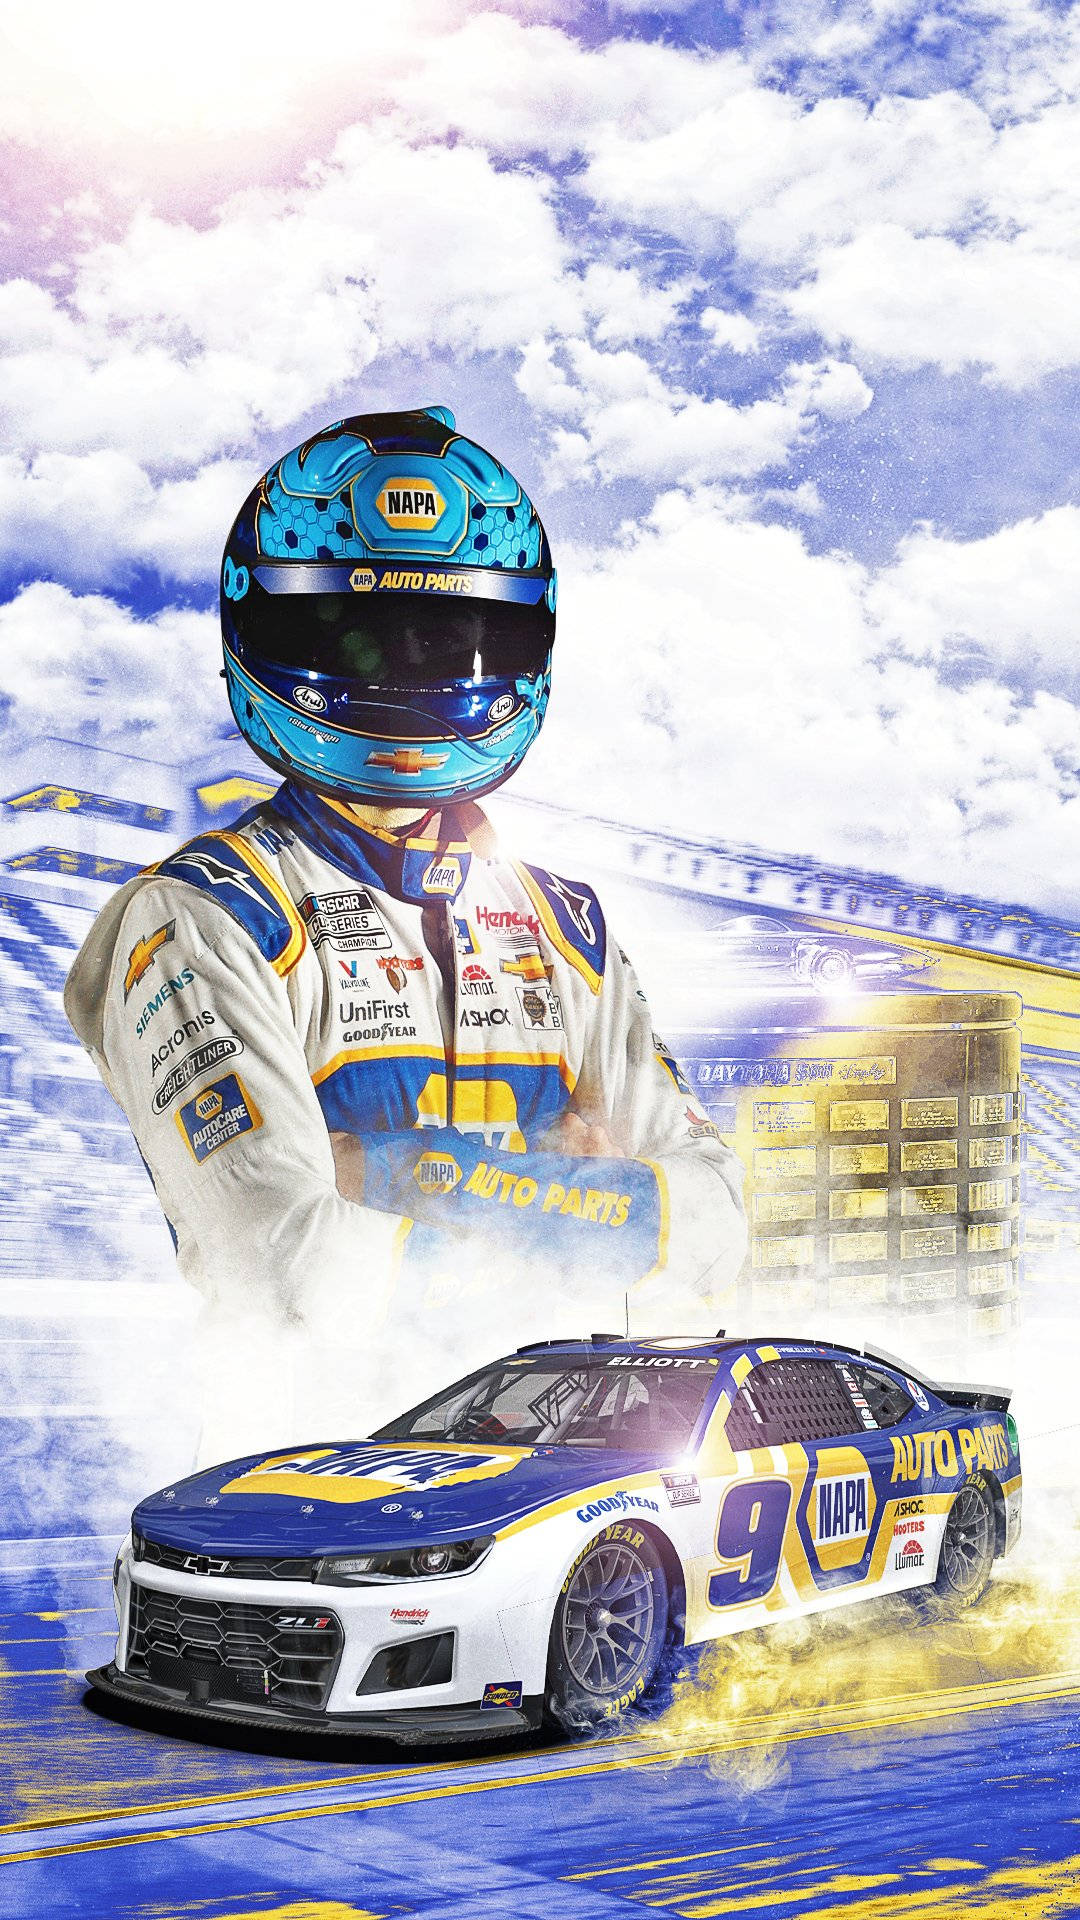 "Chase Elliott in Action - A True NASCAR Champion" Wallpaper